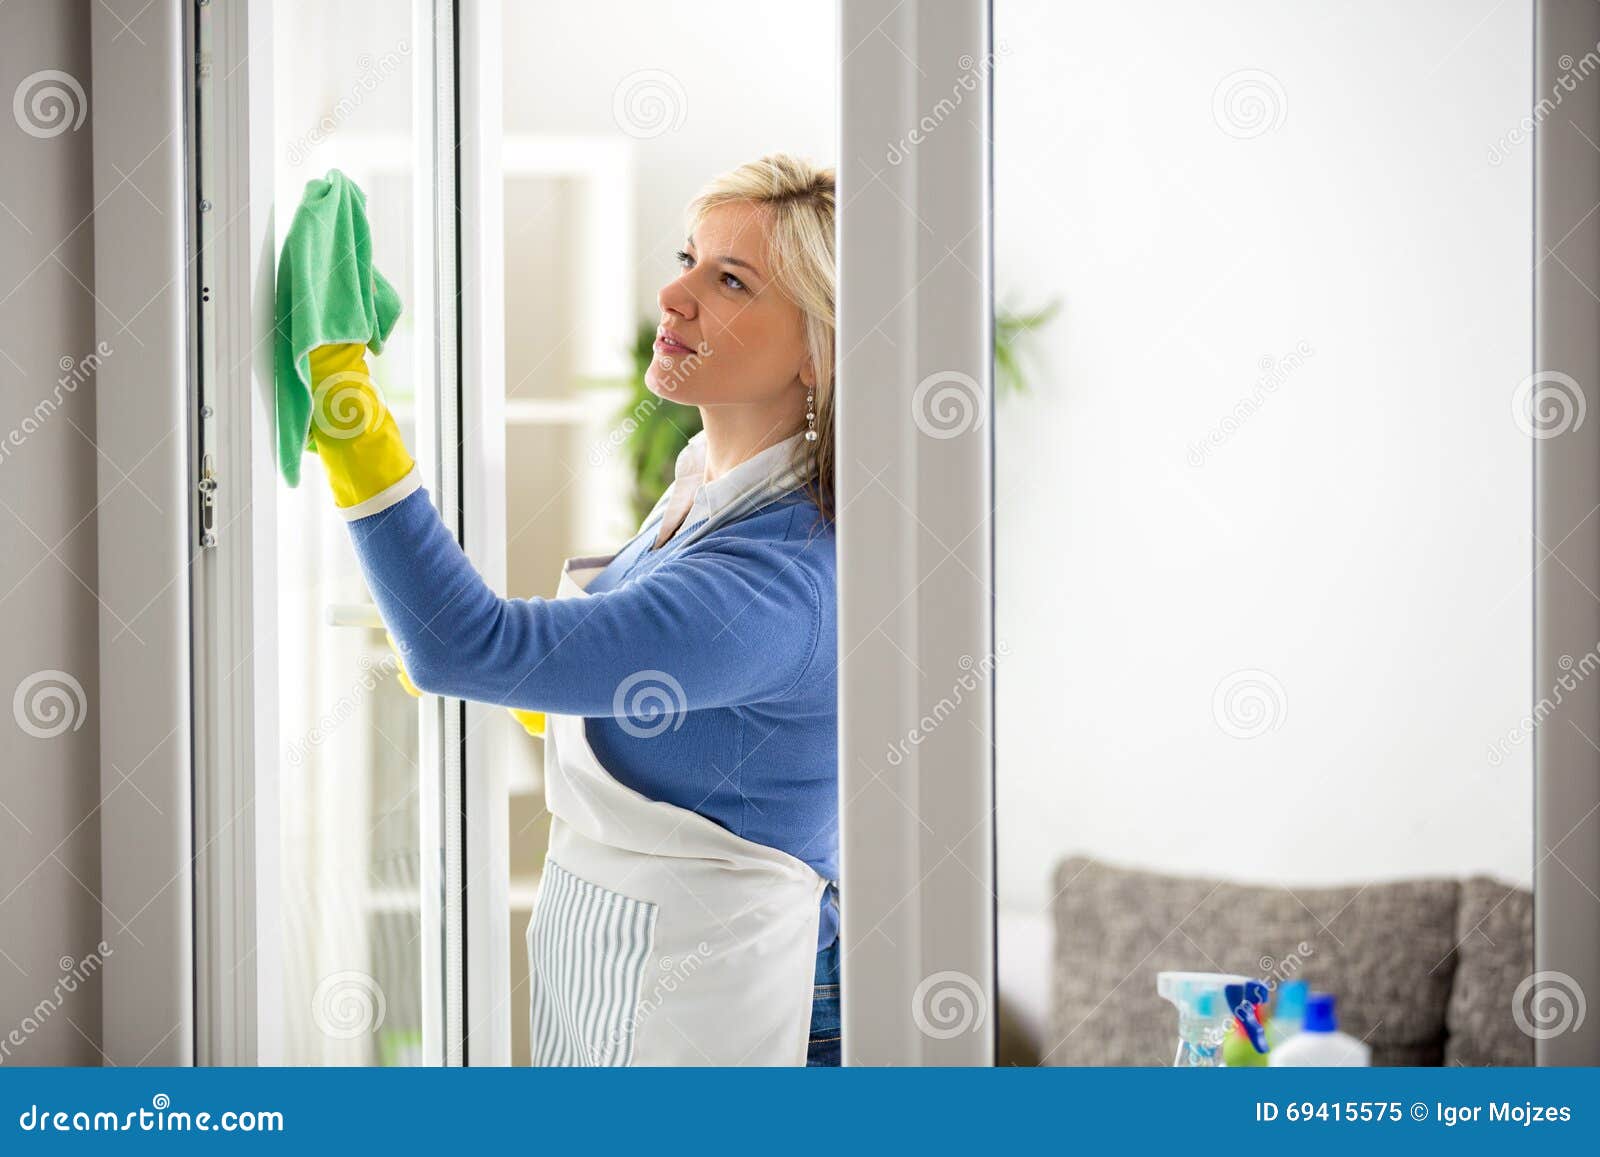 diligent woman cleans window